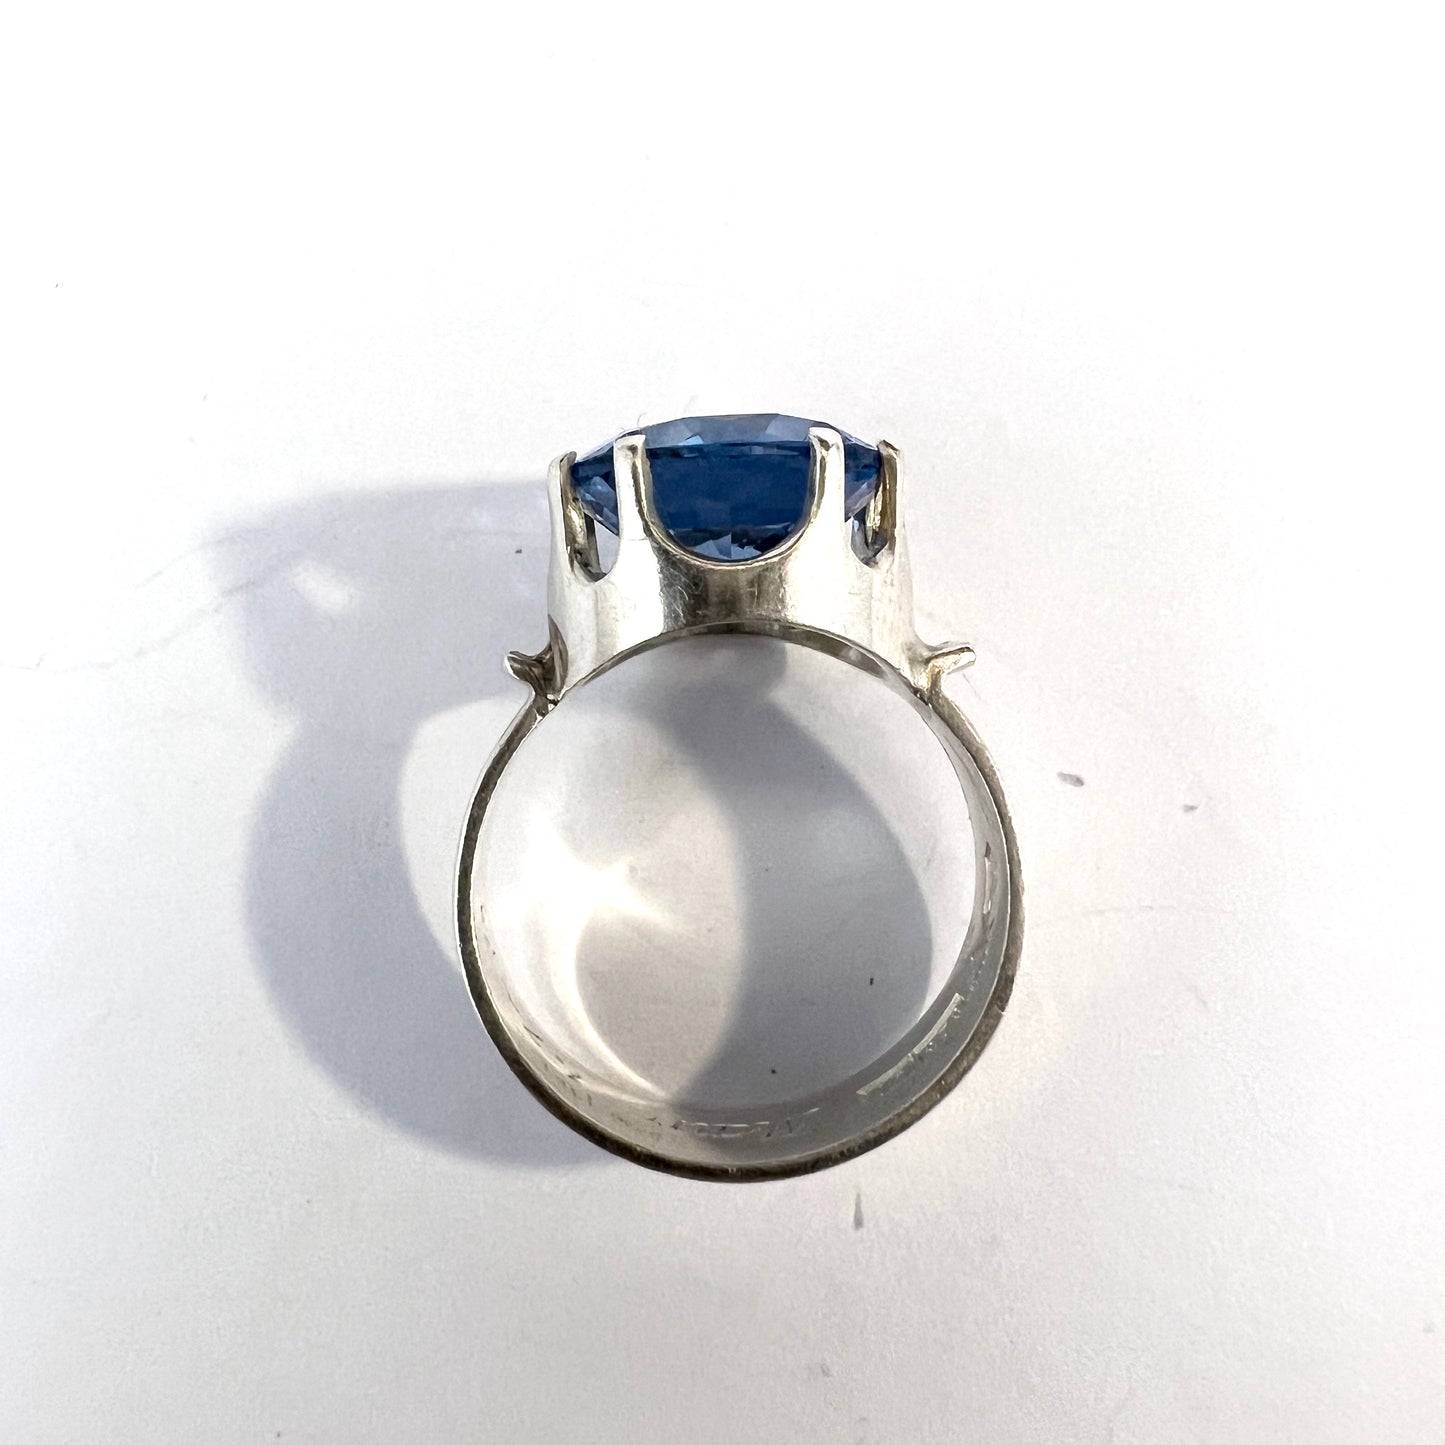 Kultakeskus, Finland 1974. Vintage Solid Silver Intense Blue Synthetic Spinel Ring.